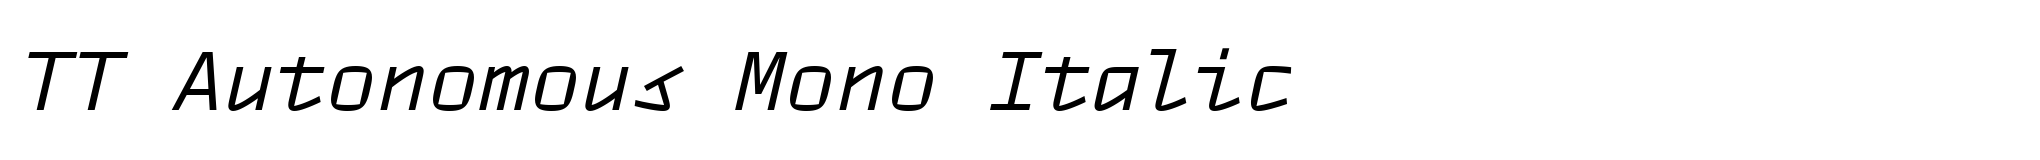 TT Autonomous Mono Italic image